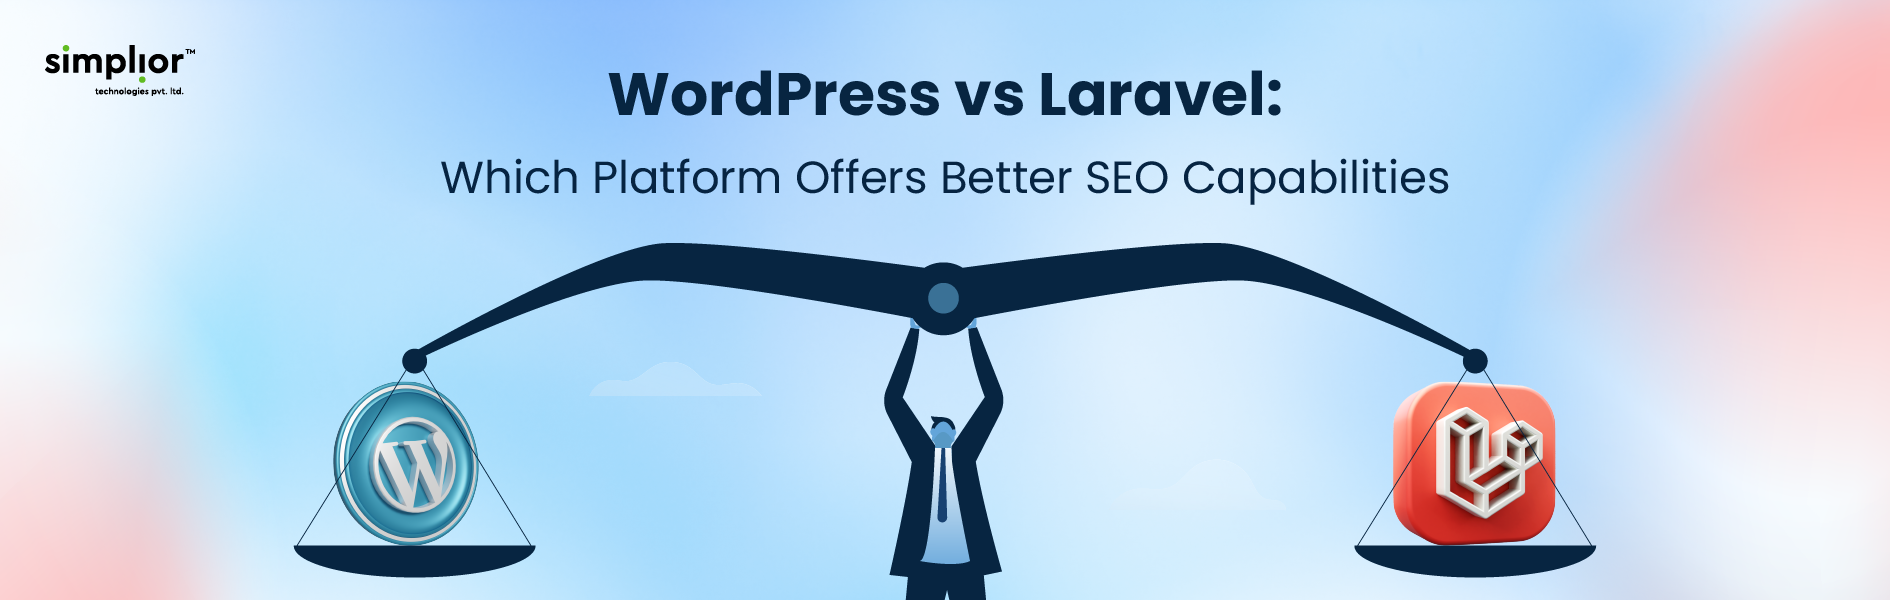 WordPress-vs-Laravel-Simplior